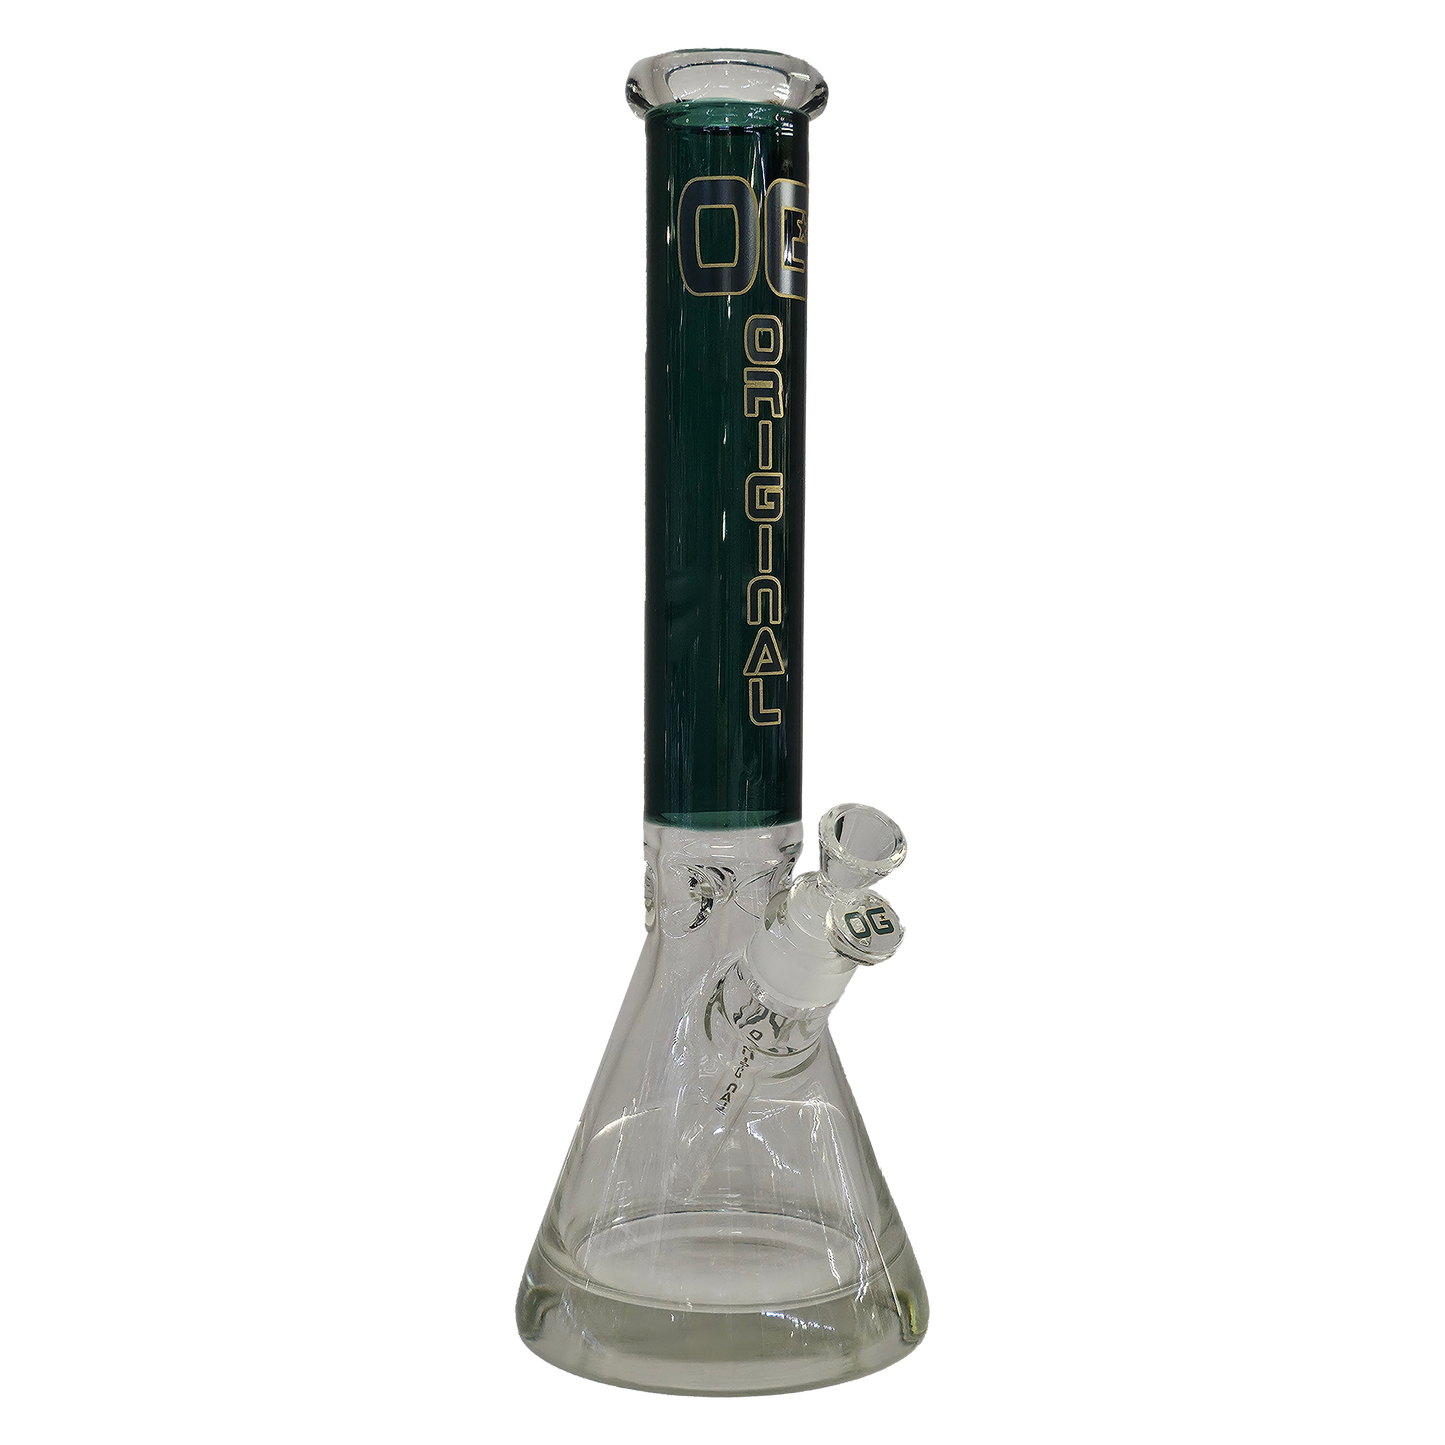 Teal OG 16" Colored Neck Bong - Glass Bong - The Wee Smoke Shop 